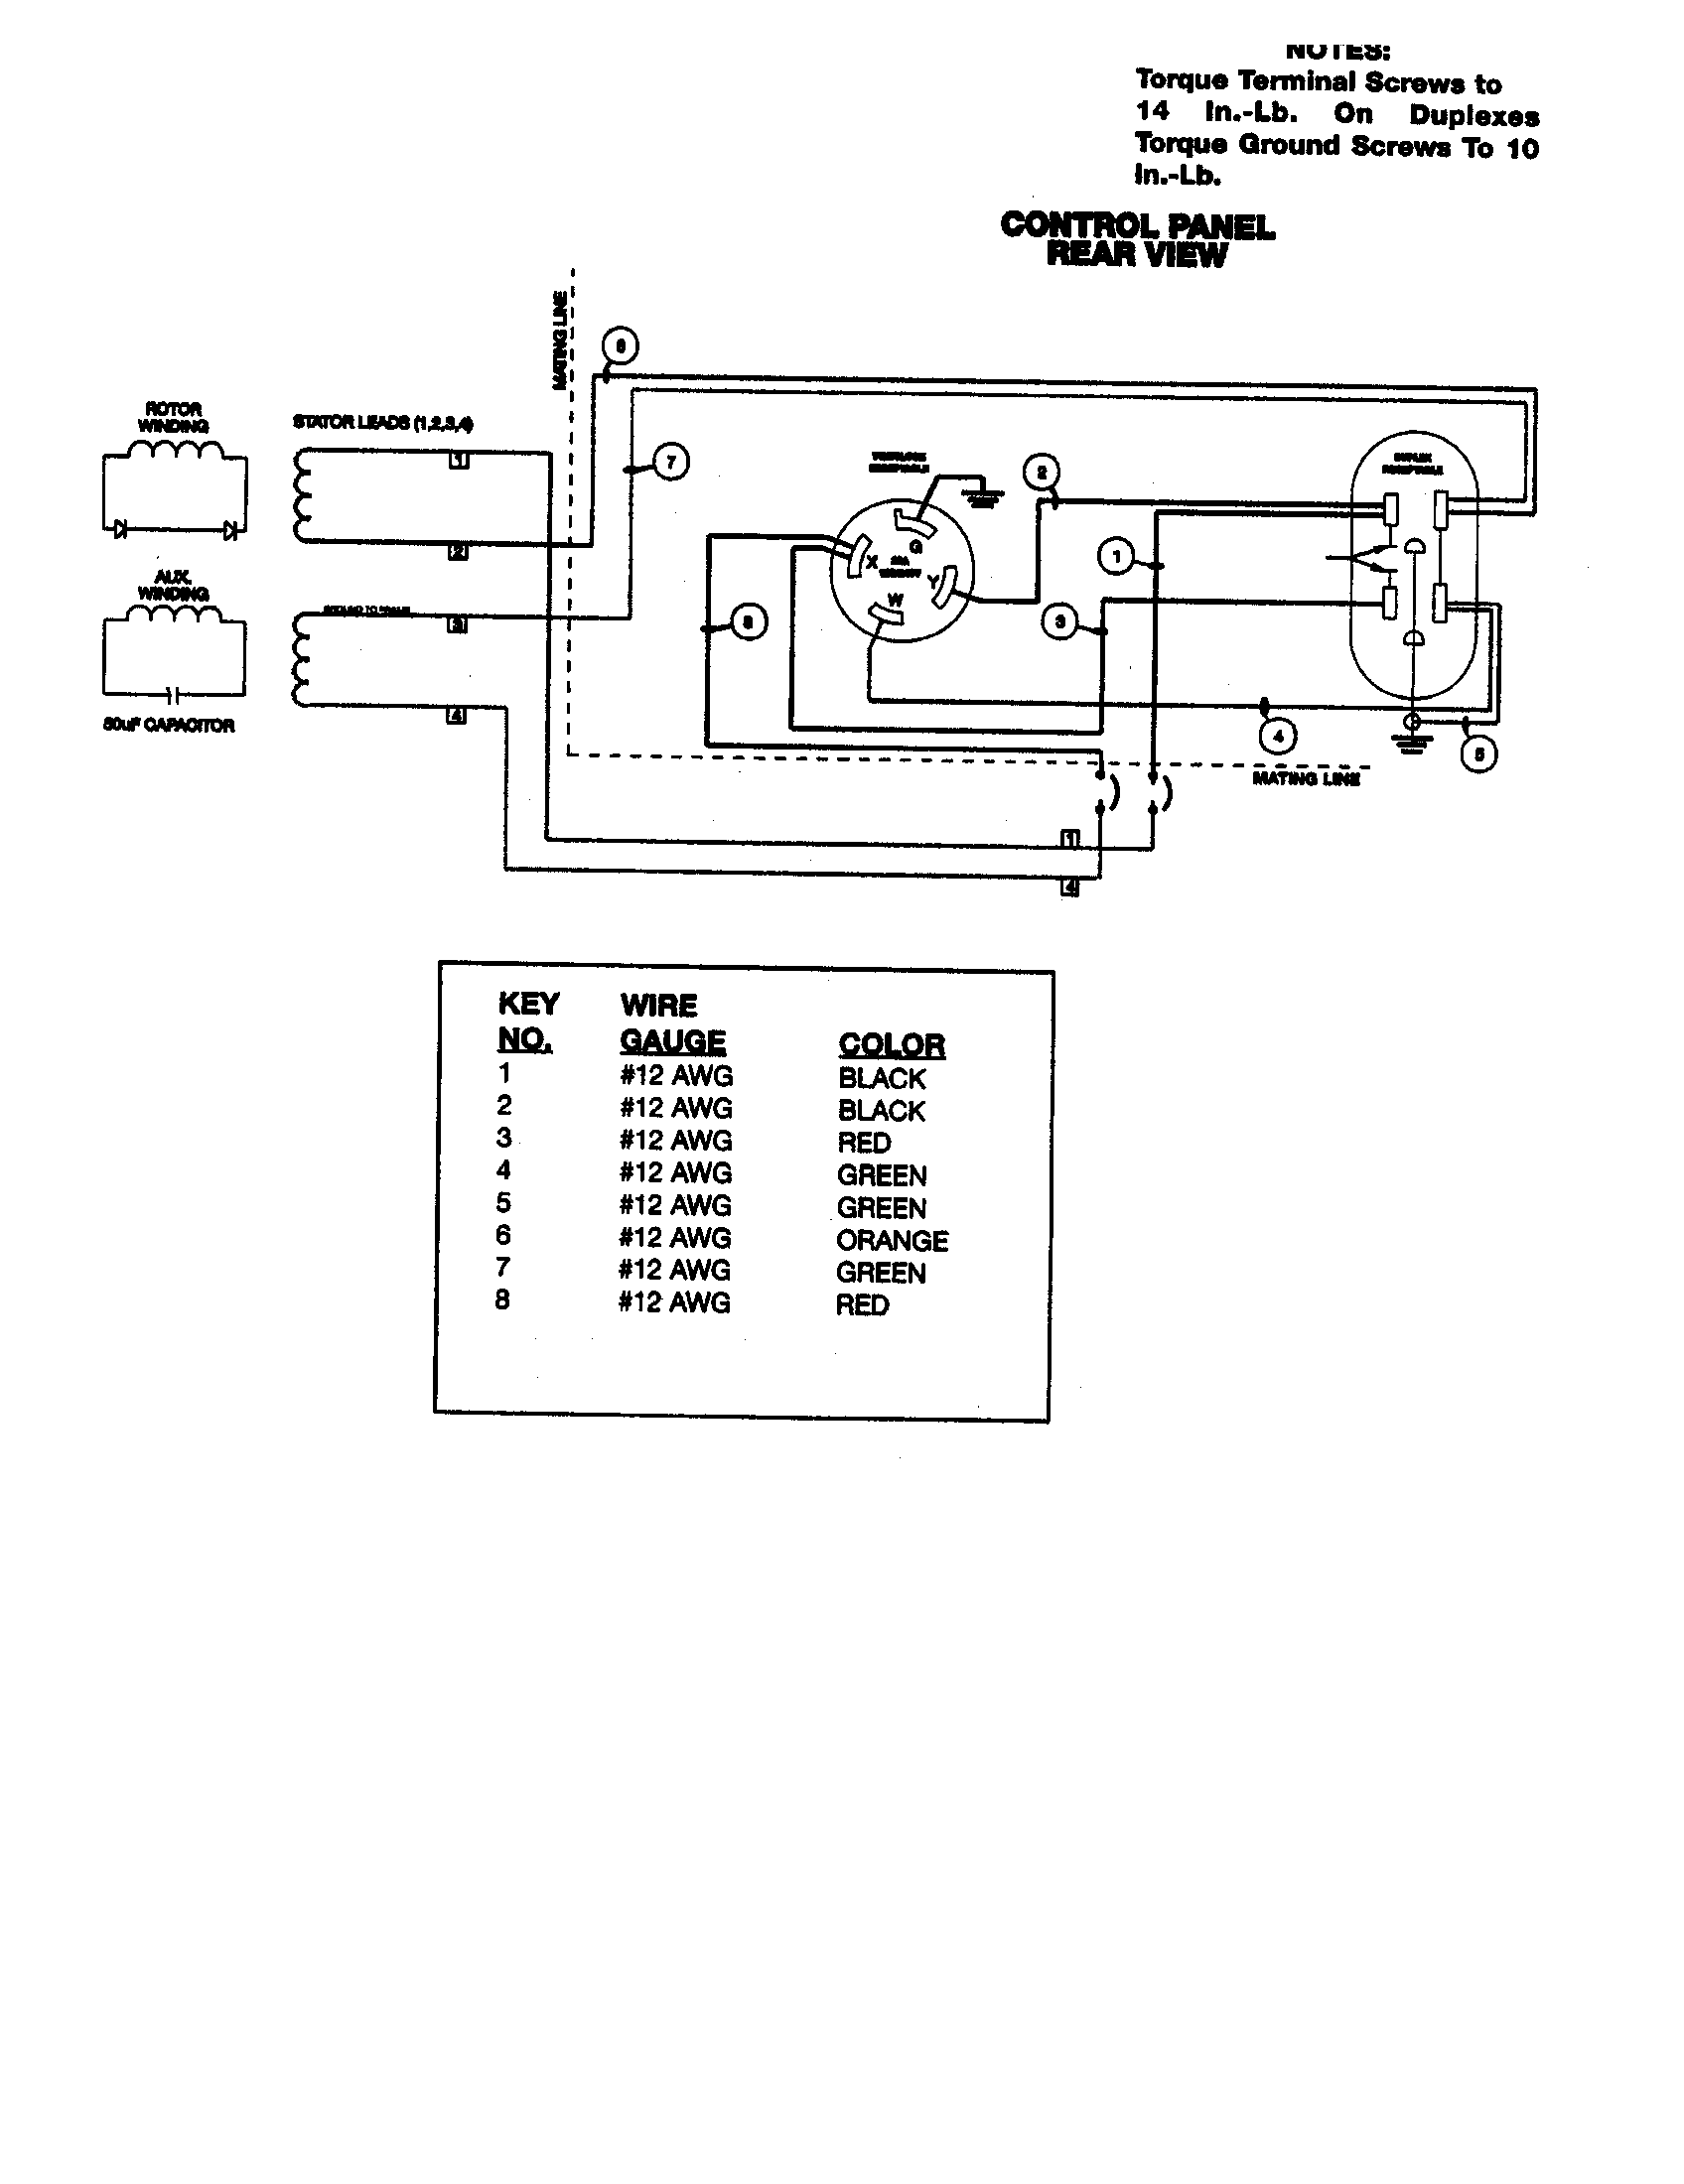 Devilbis Air Compressor Wiring Diagram - Wiring Diagram